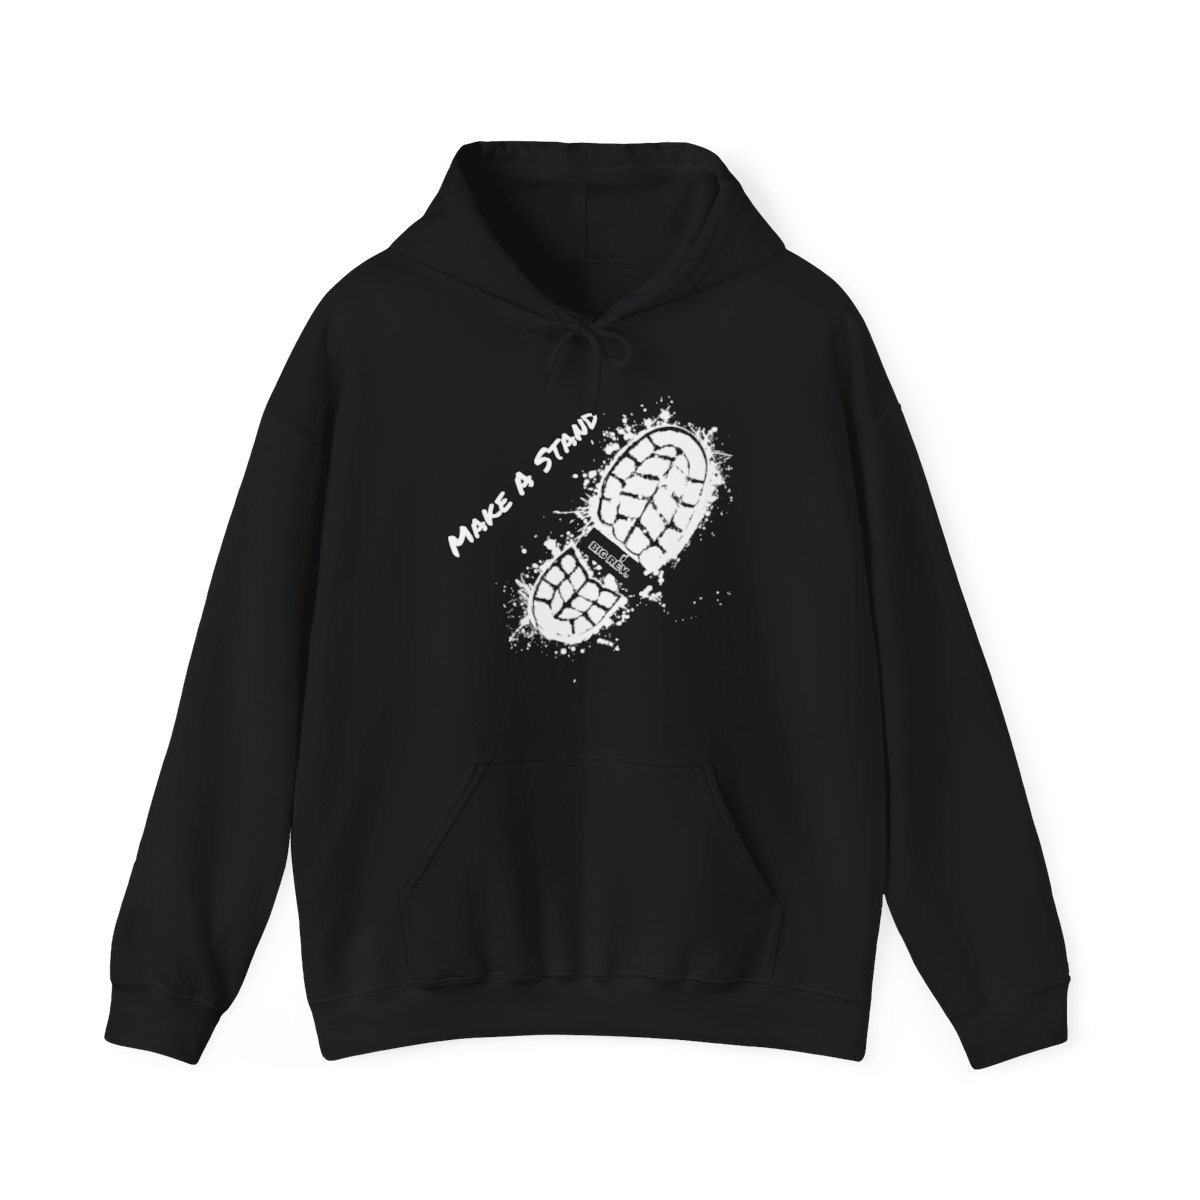 Big Rev – Make A Stand Pullover Hooded Sweatshirt